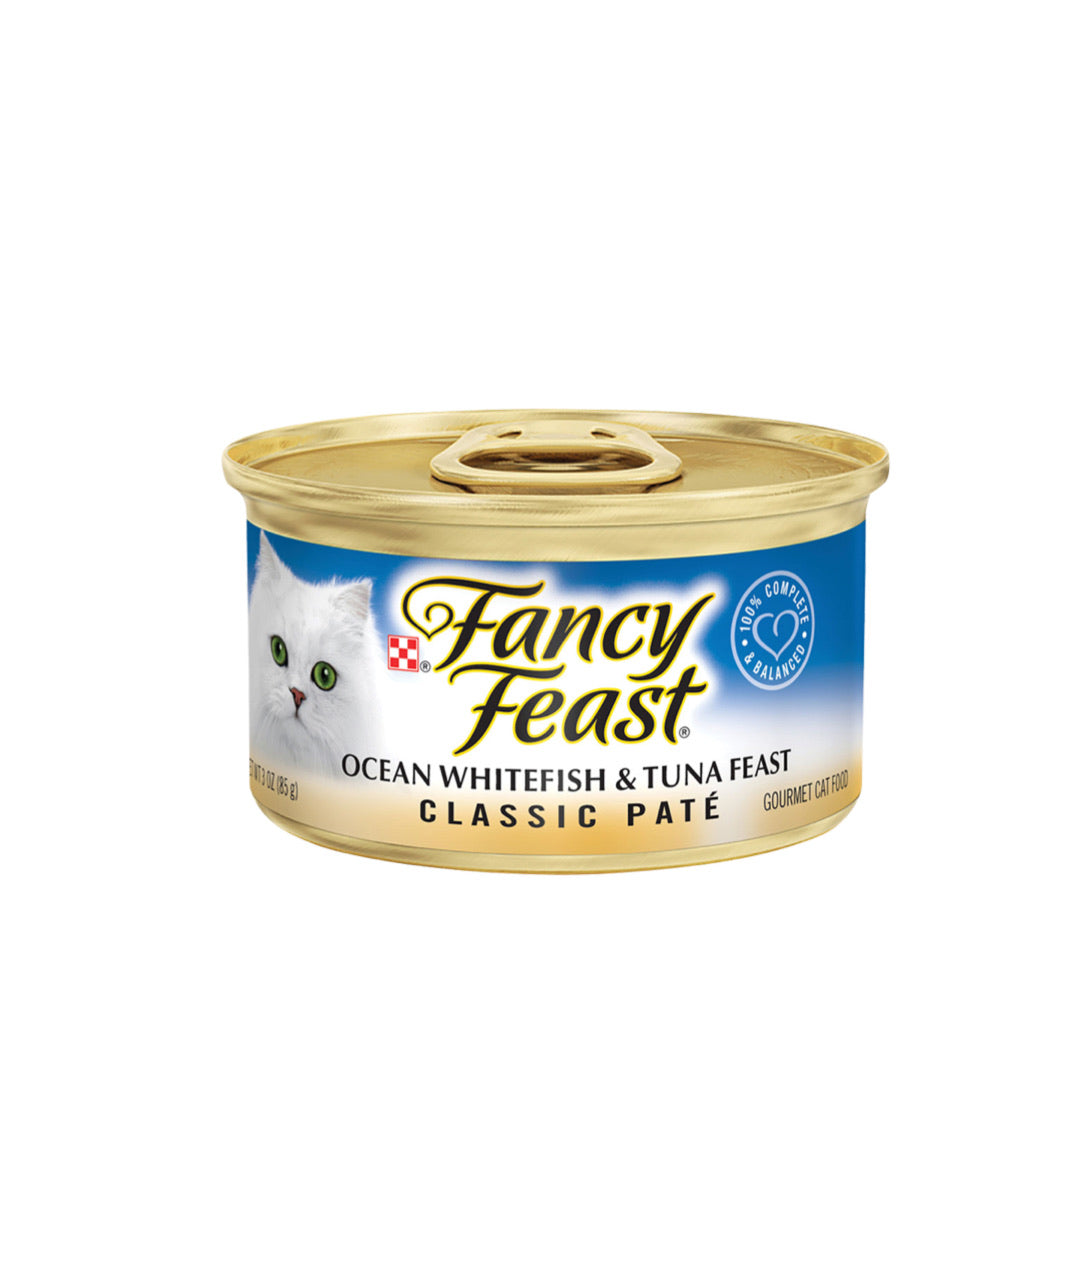 Fancy Feast Classic Paté Ocean Whitefish & Tuna Feast (85g)